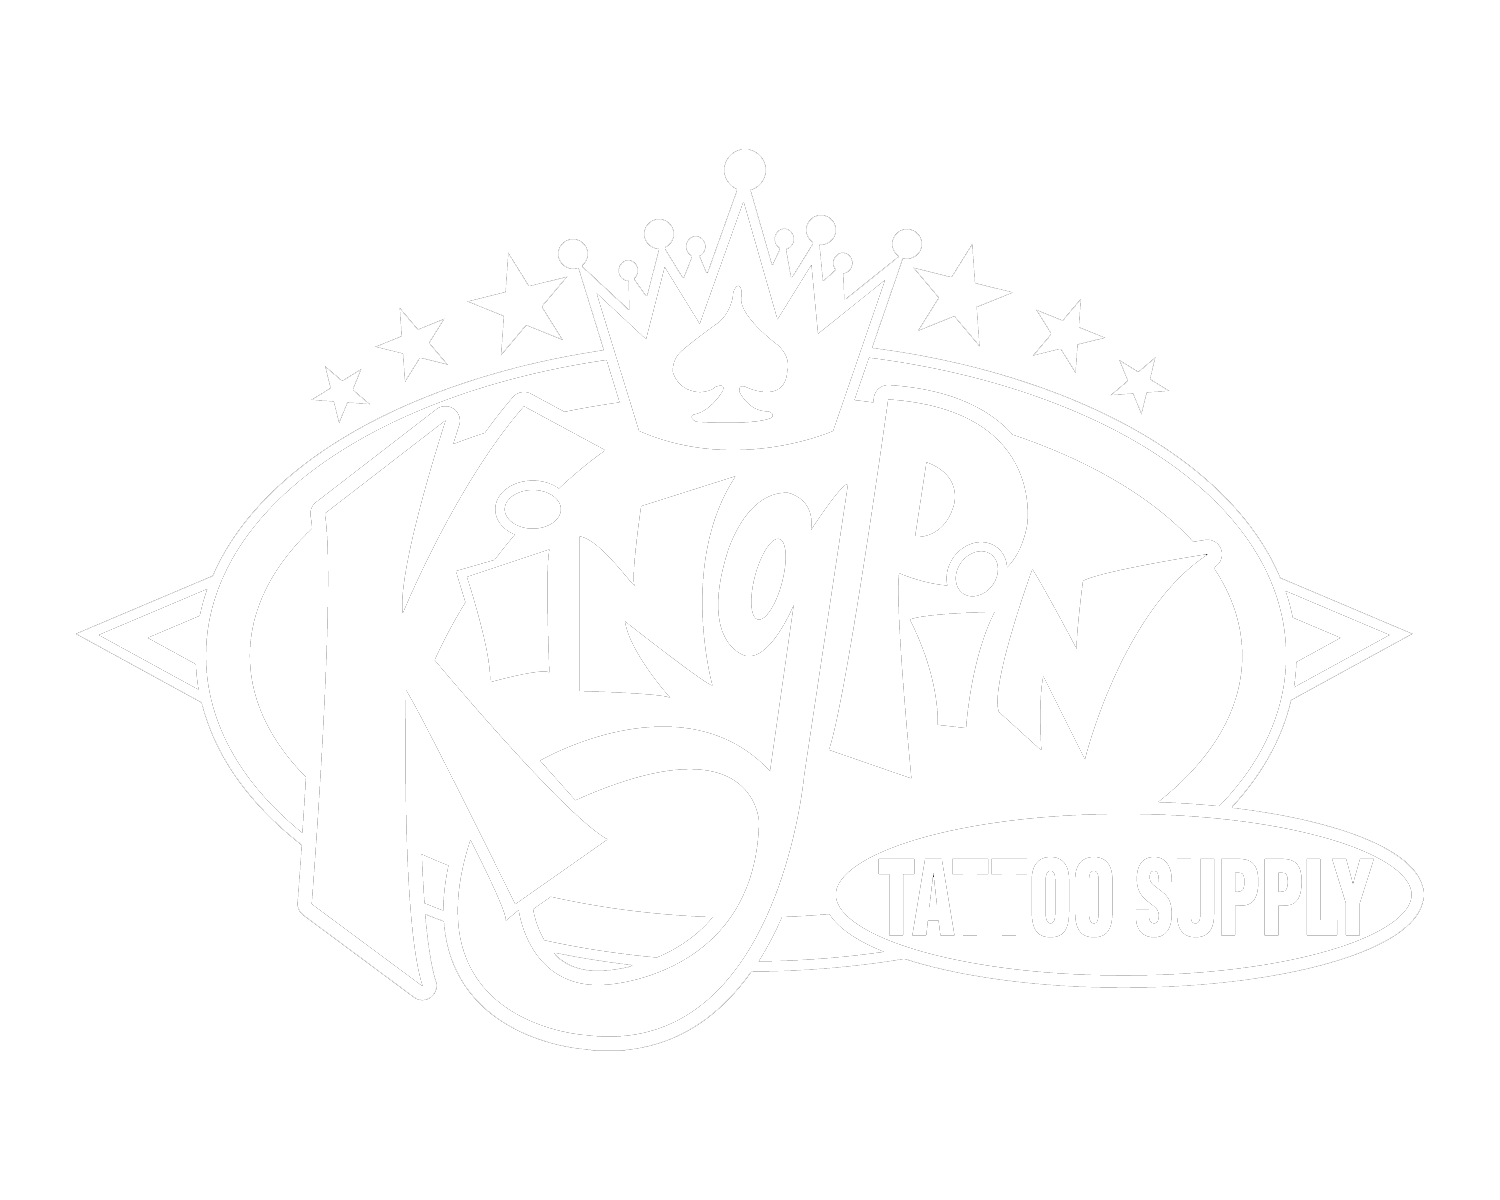 King Pin Tattoo Supply